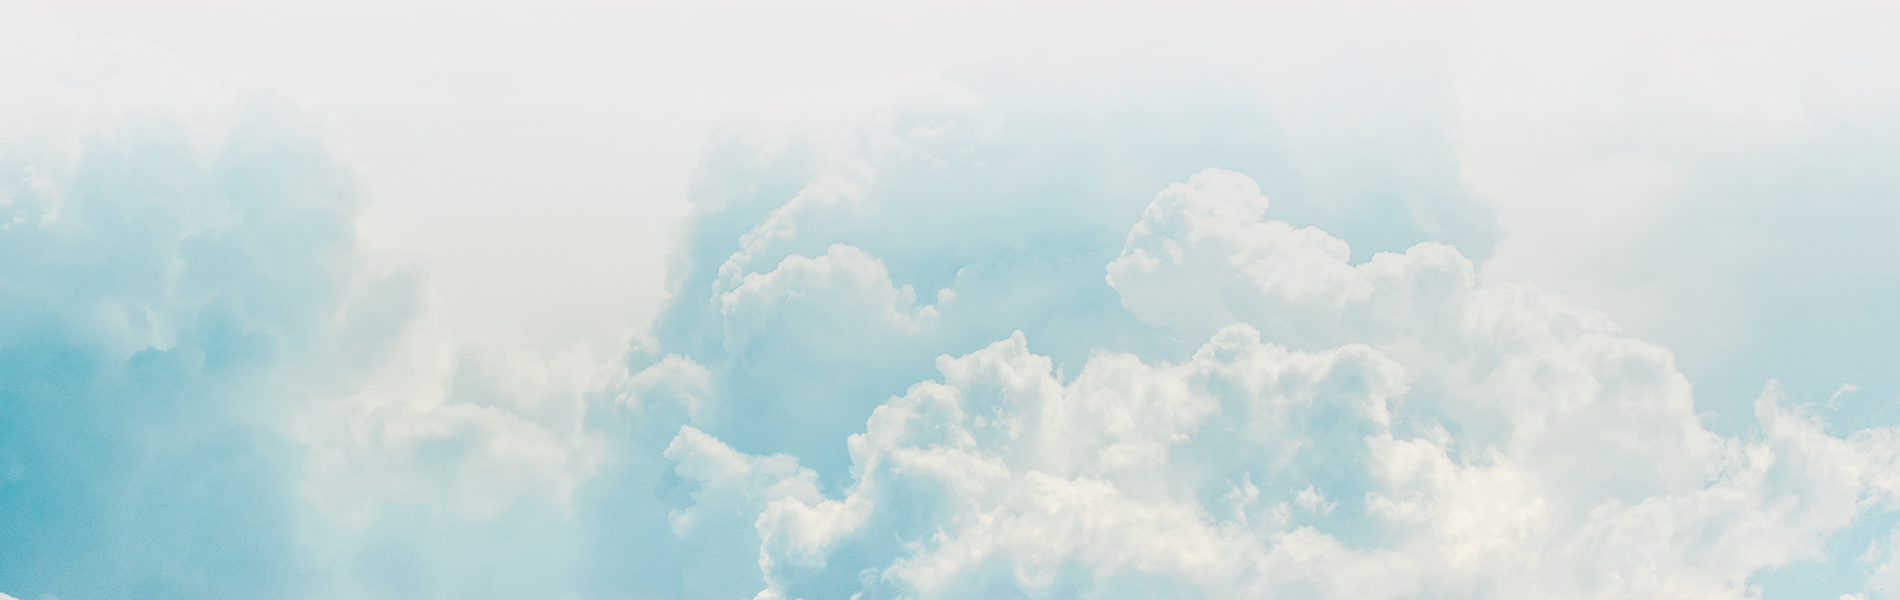 bg_clouds